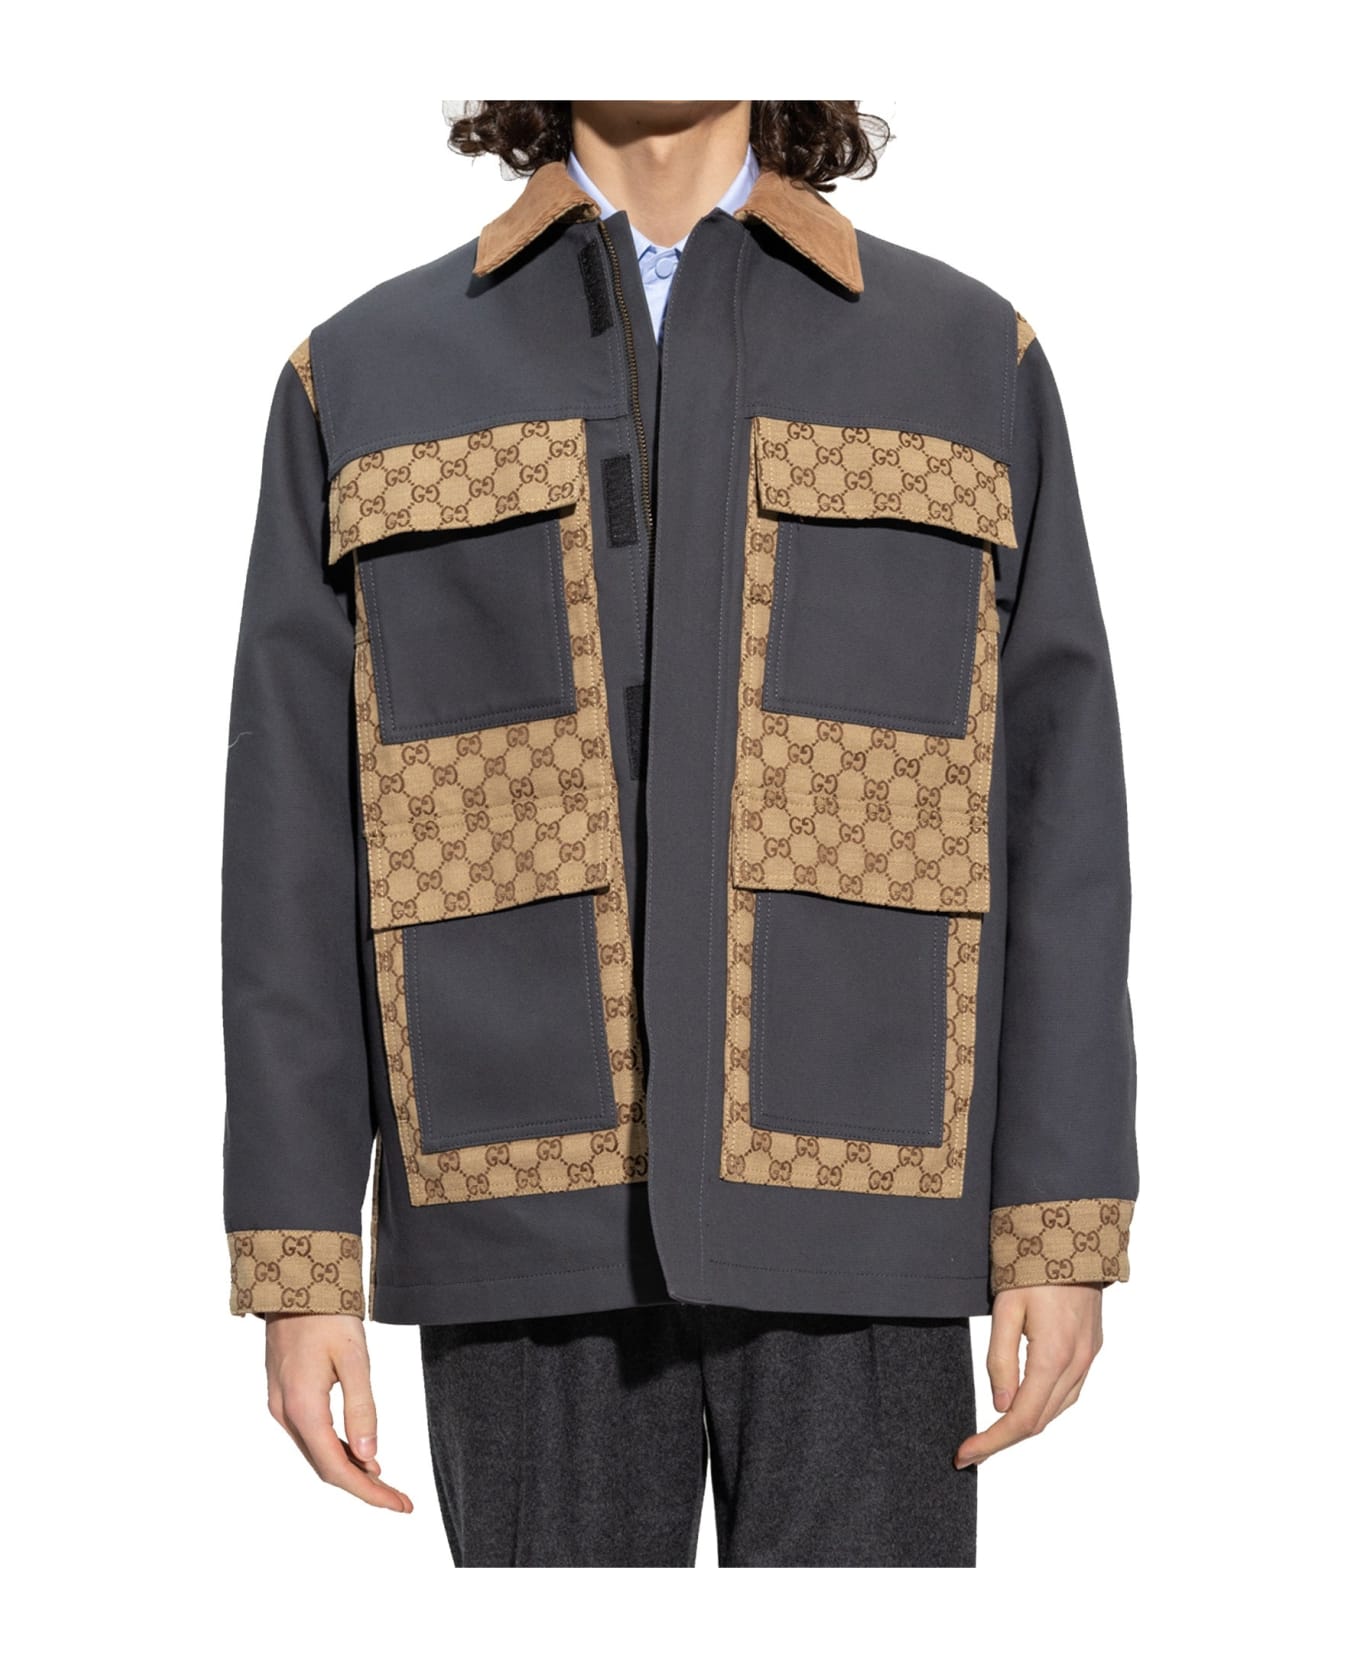 Gucci Gg Supreme Cotton Jacket - Gray ジャケット